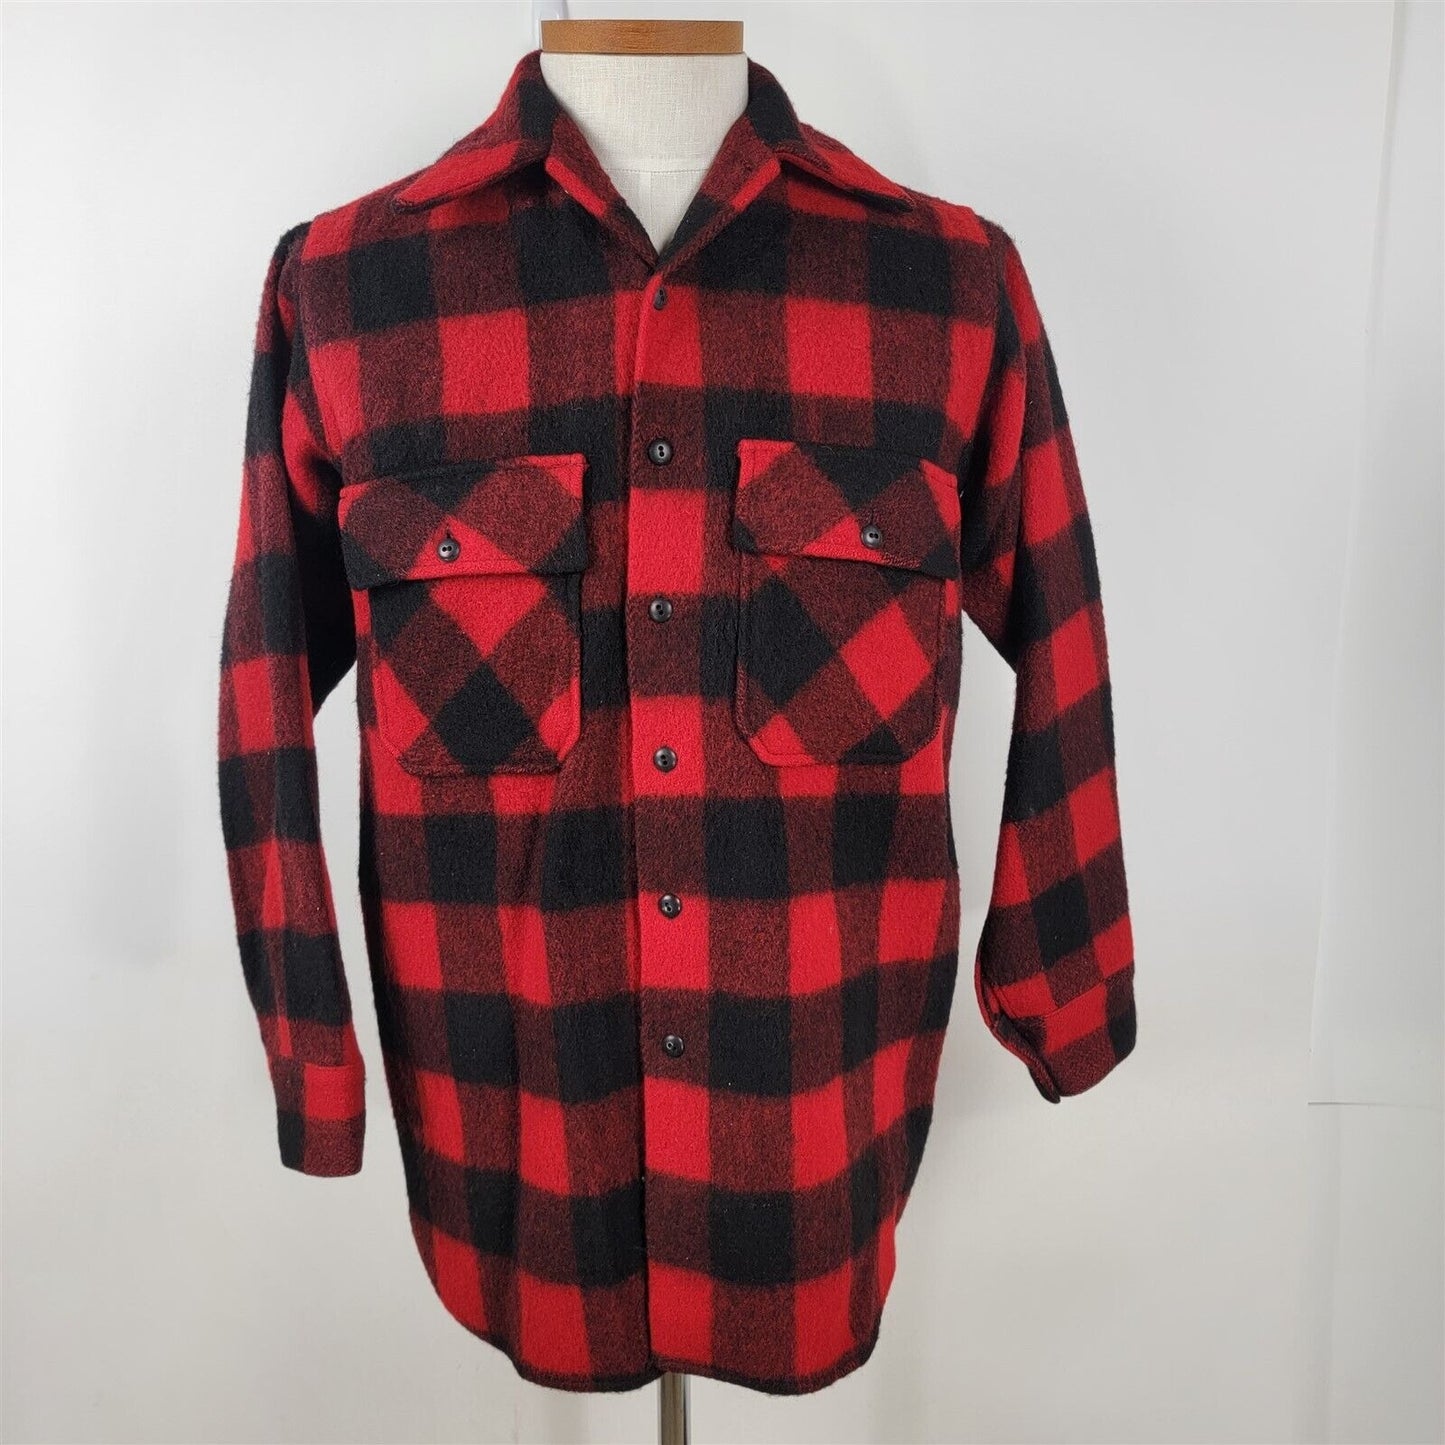 Vintage Woolmaster Red & Black Plaid Flannel Shirt Jacket Shacket